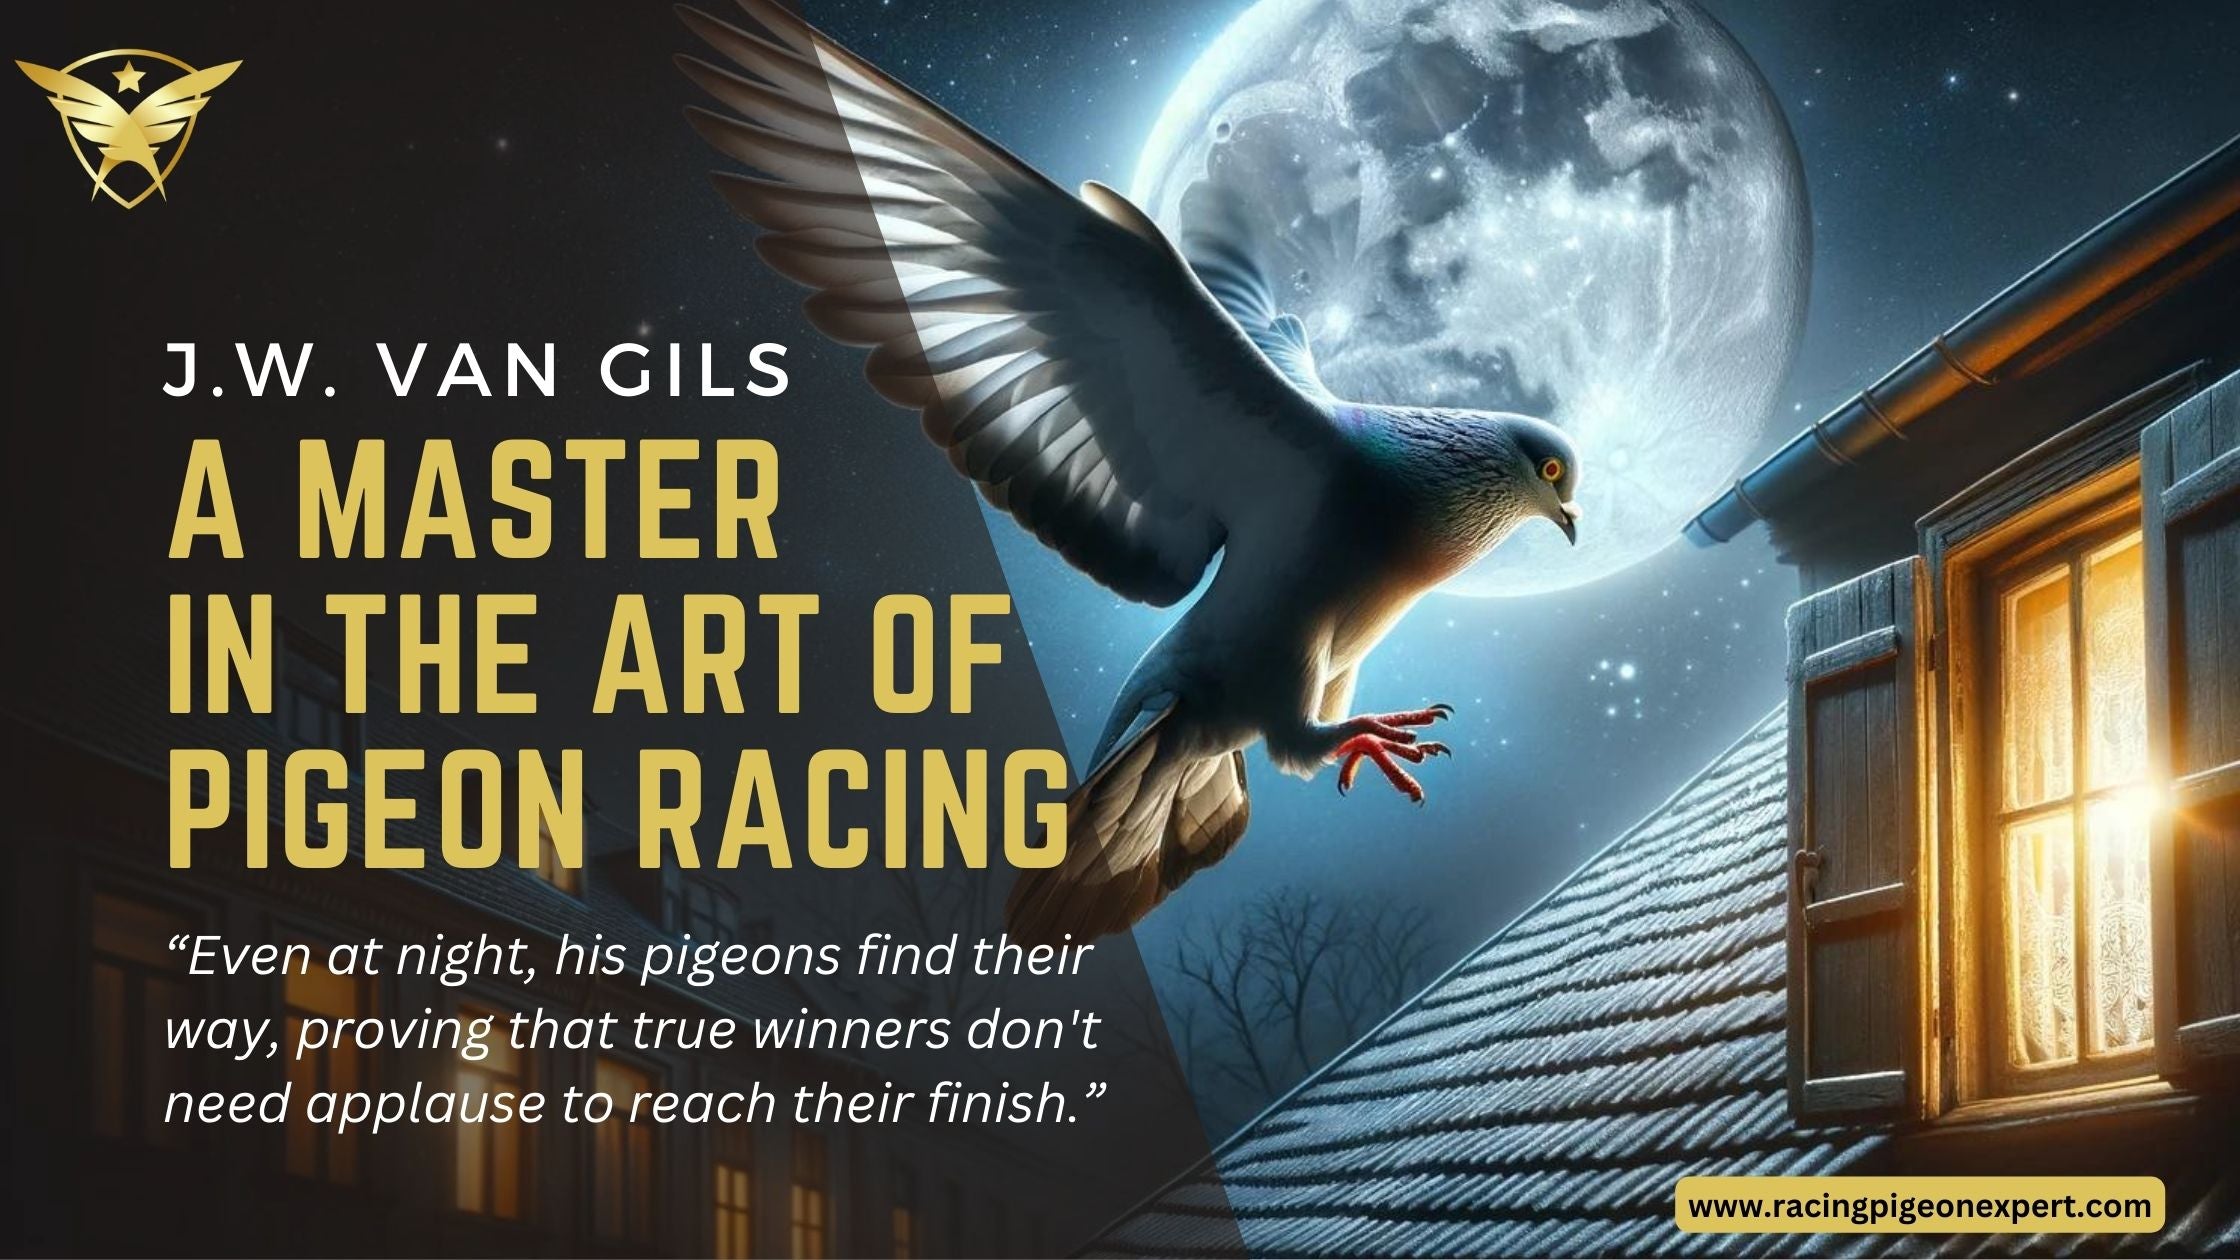 J.W. van Gils: A Master in the Art of Pigeon Racing